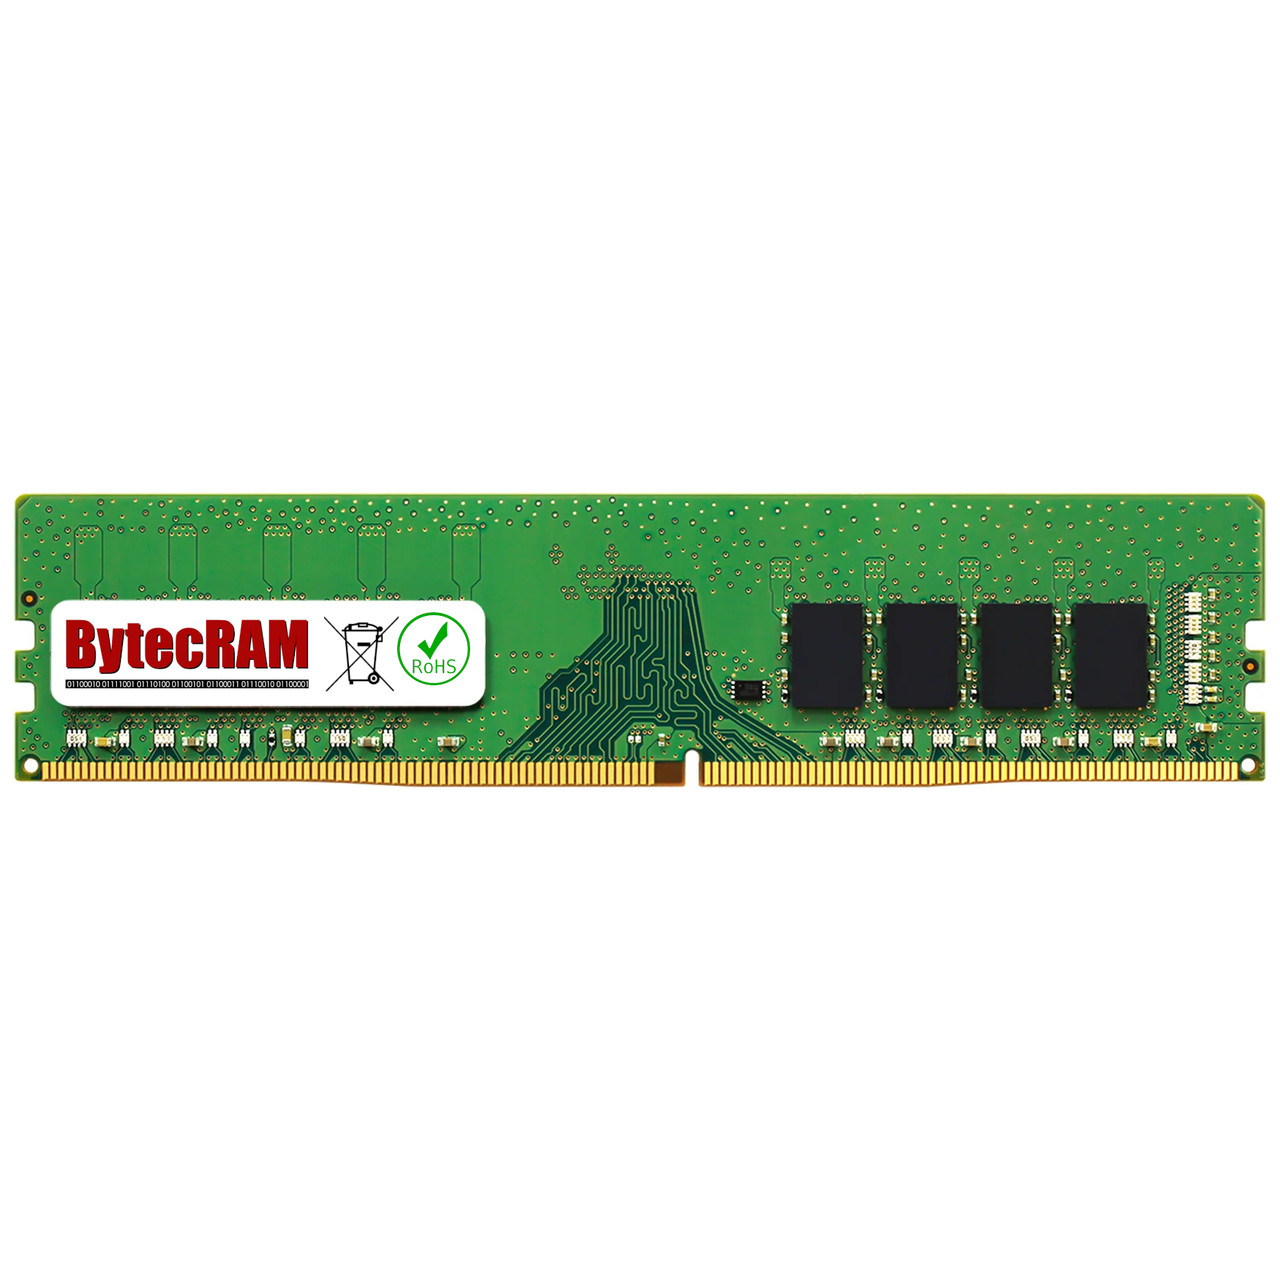 eBay*8GB HP Omen 870-255xt DDR4 2133MHz UDIMM Memory RAM Upgrade